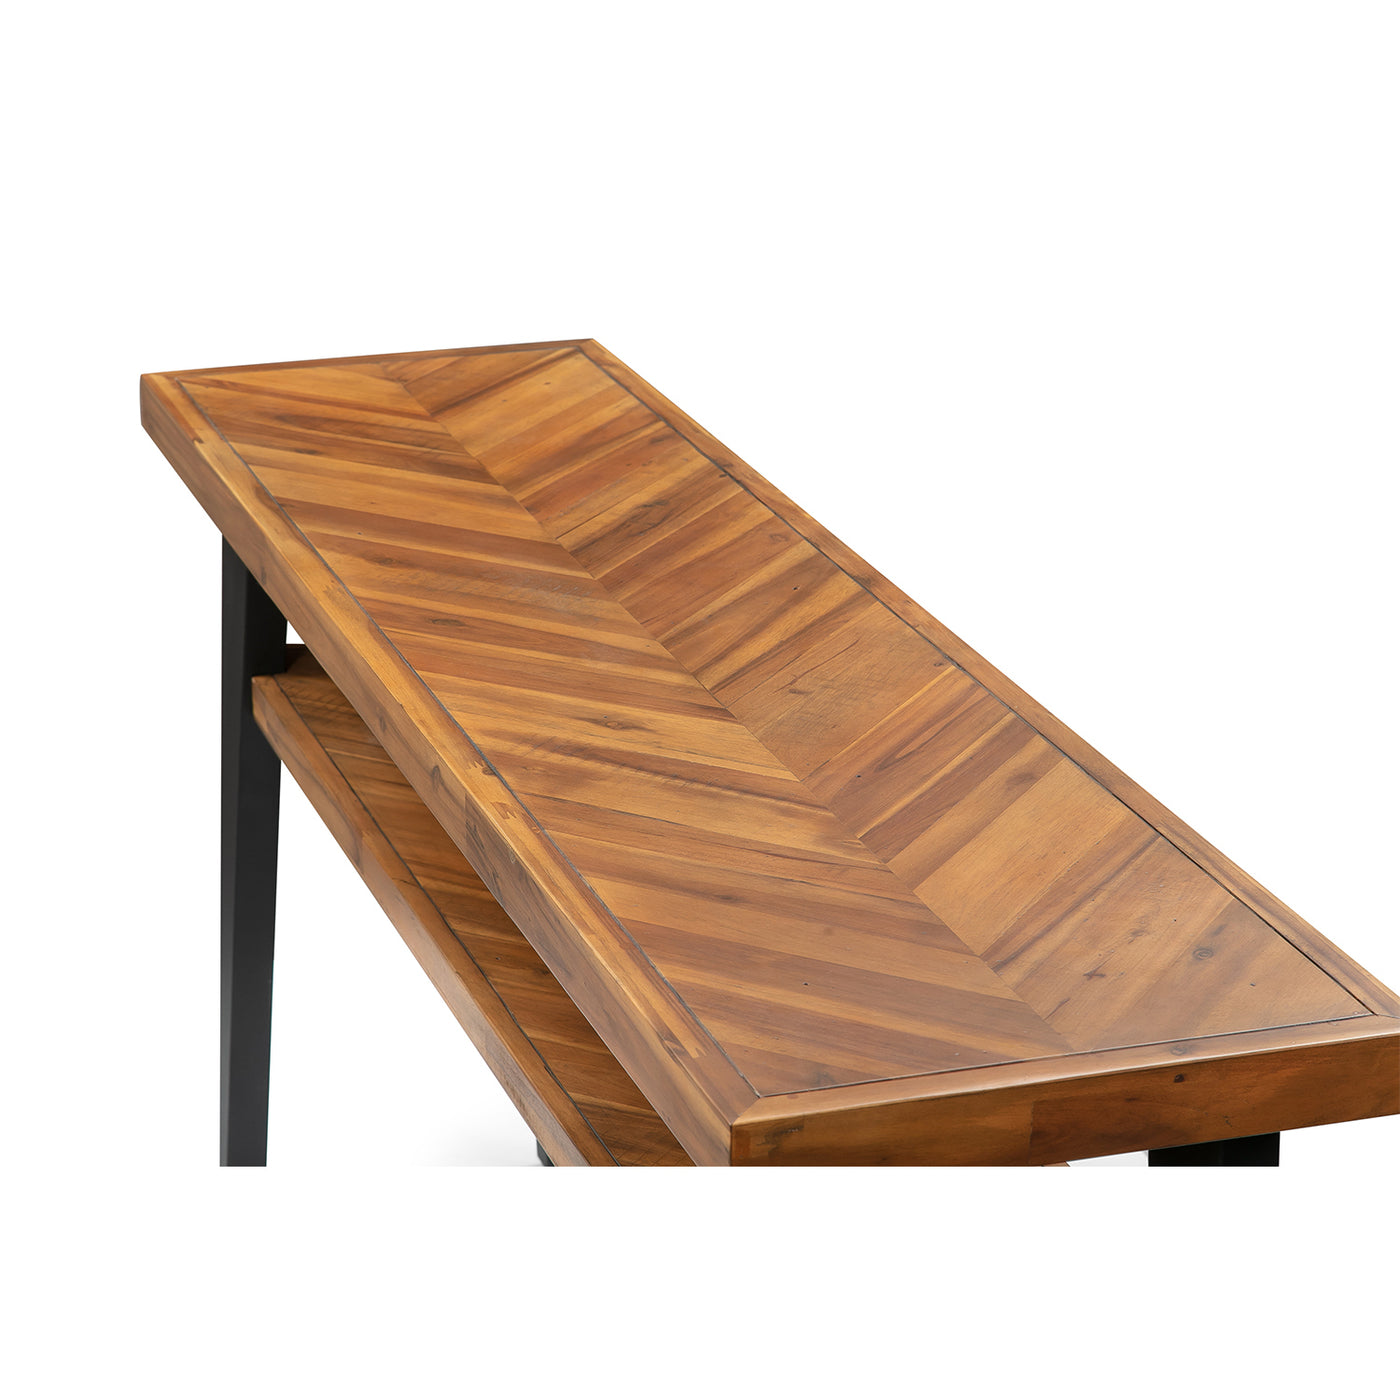 Avalon Wood Console Table